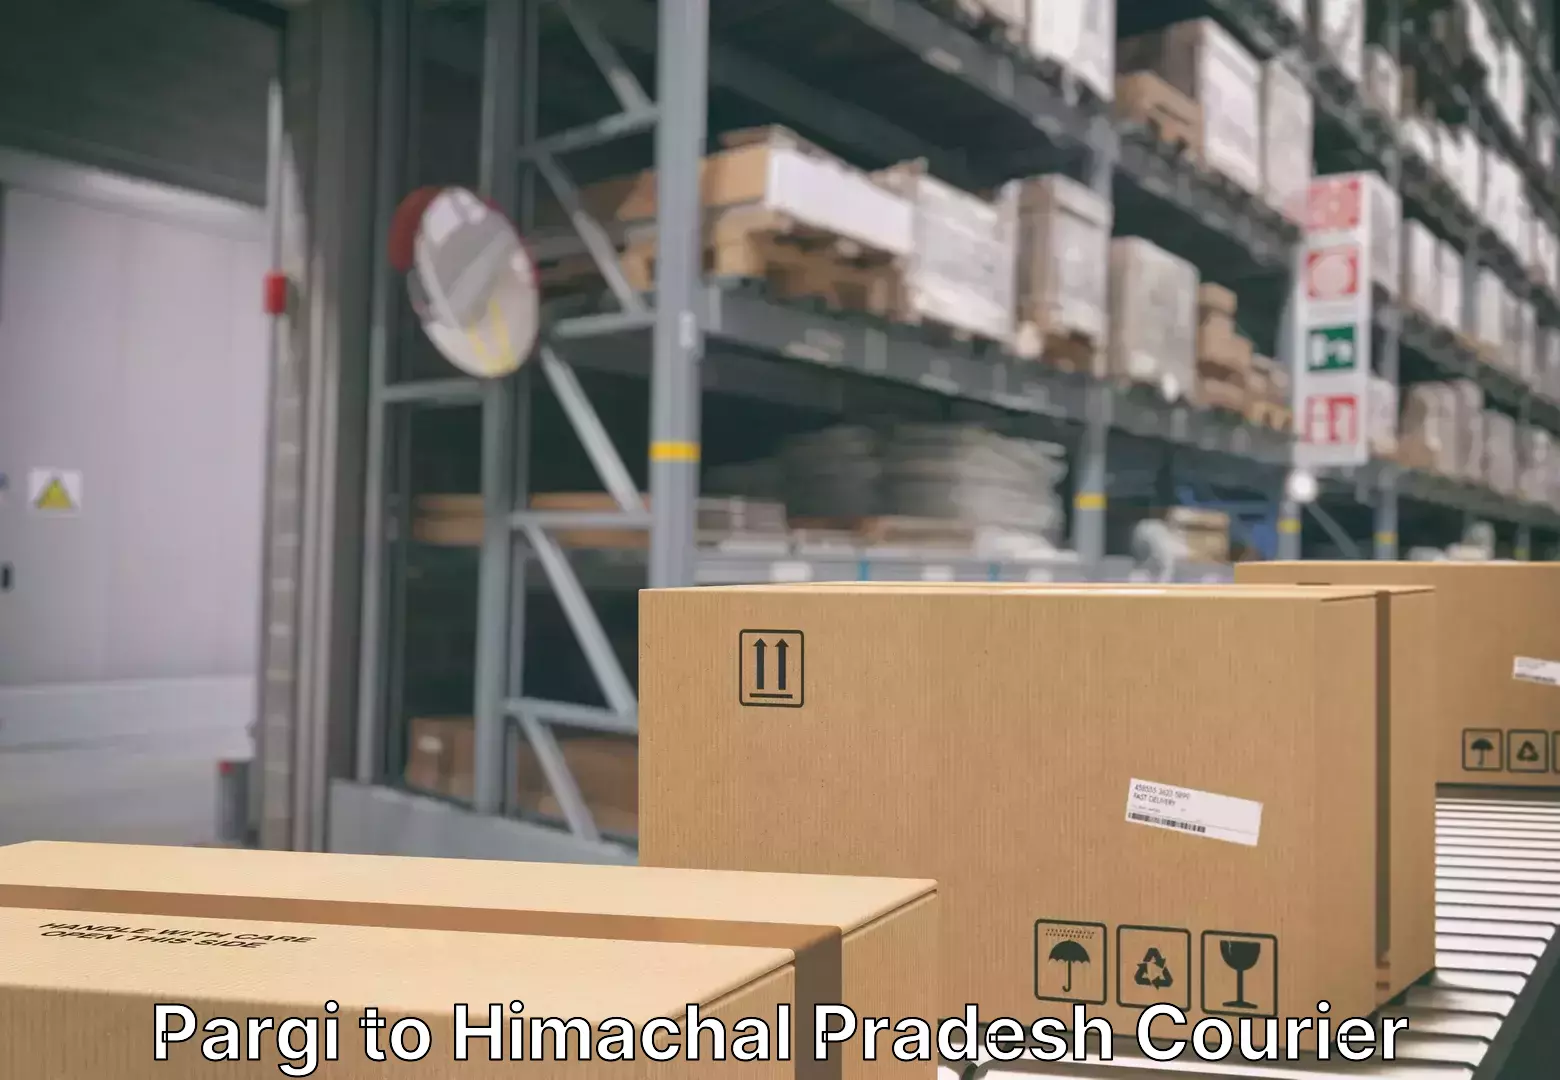 Professional moving company Pargi to Himachal Pradesh